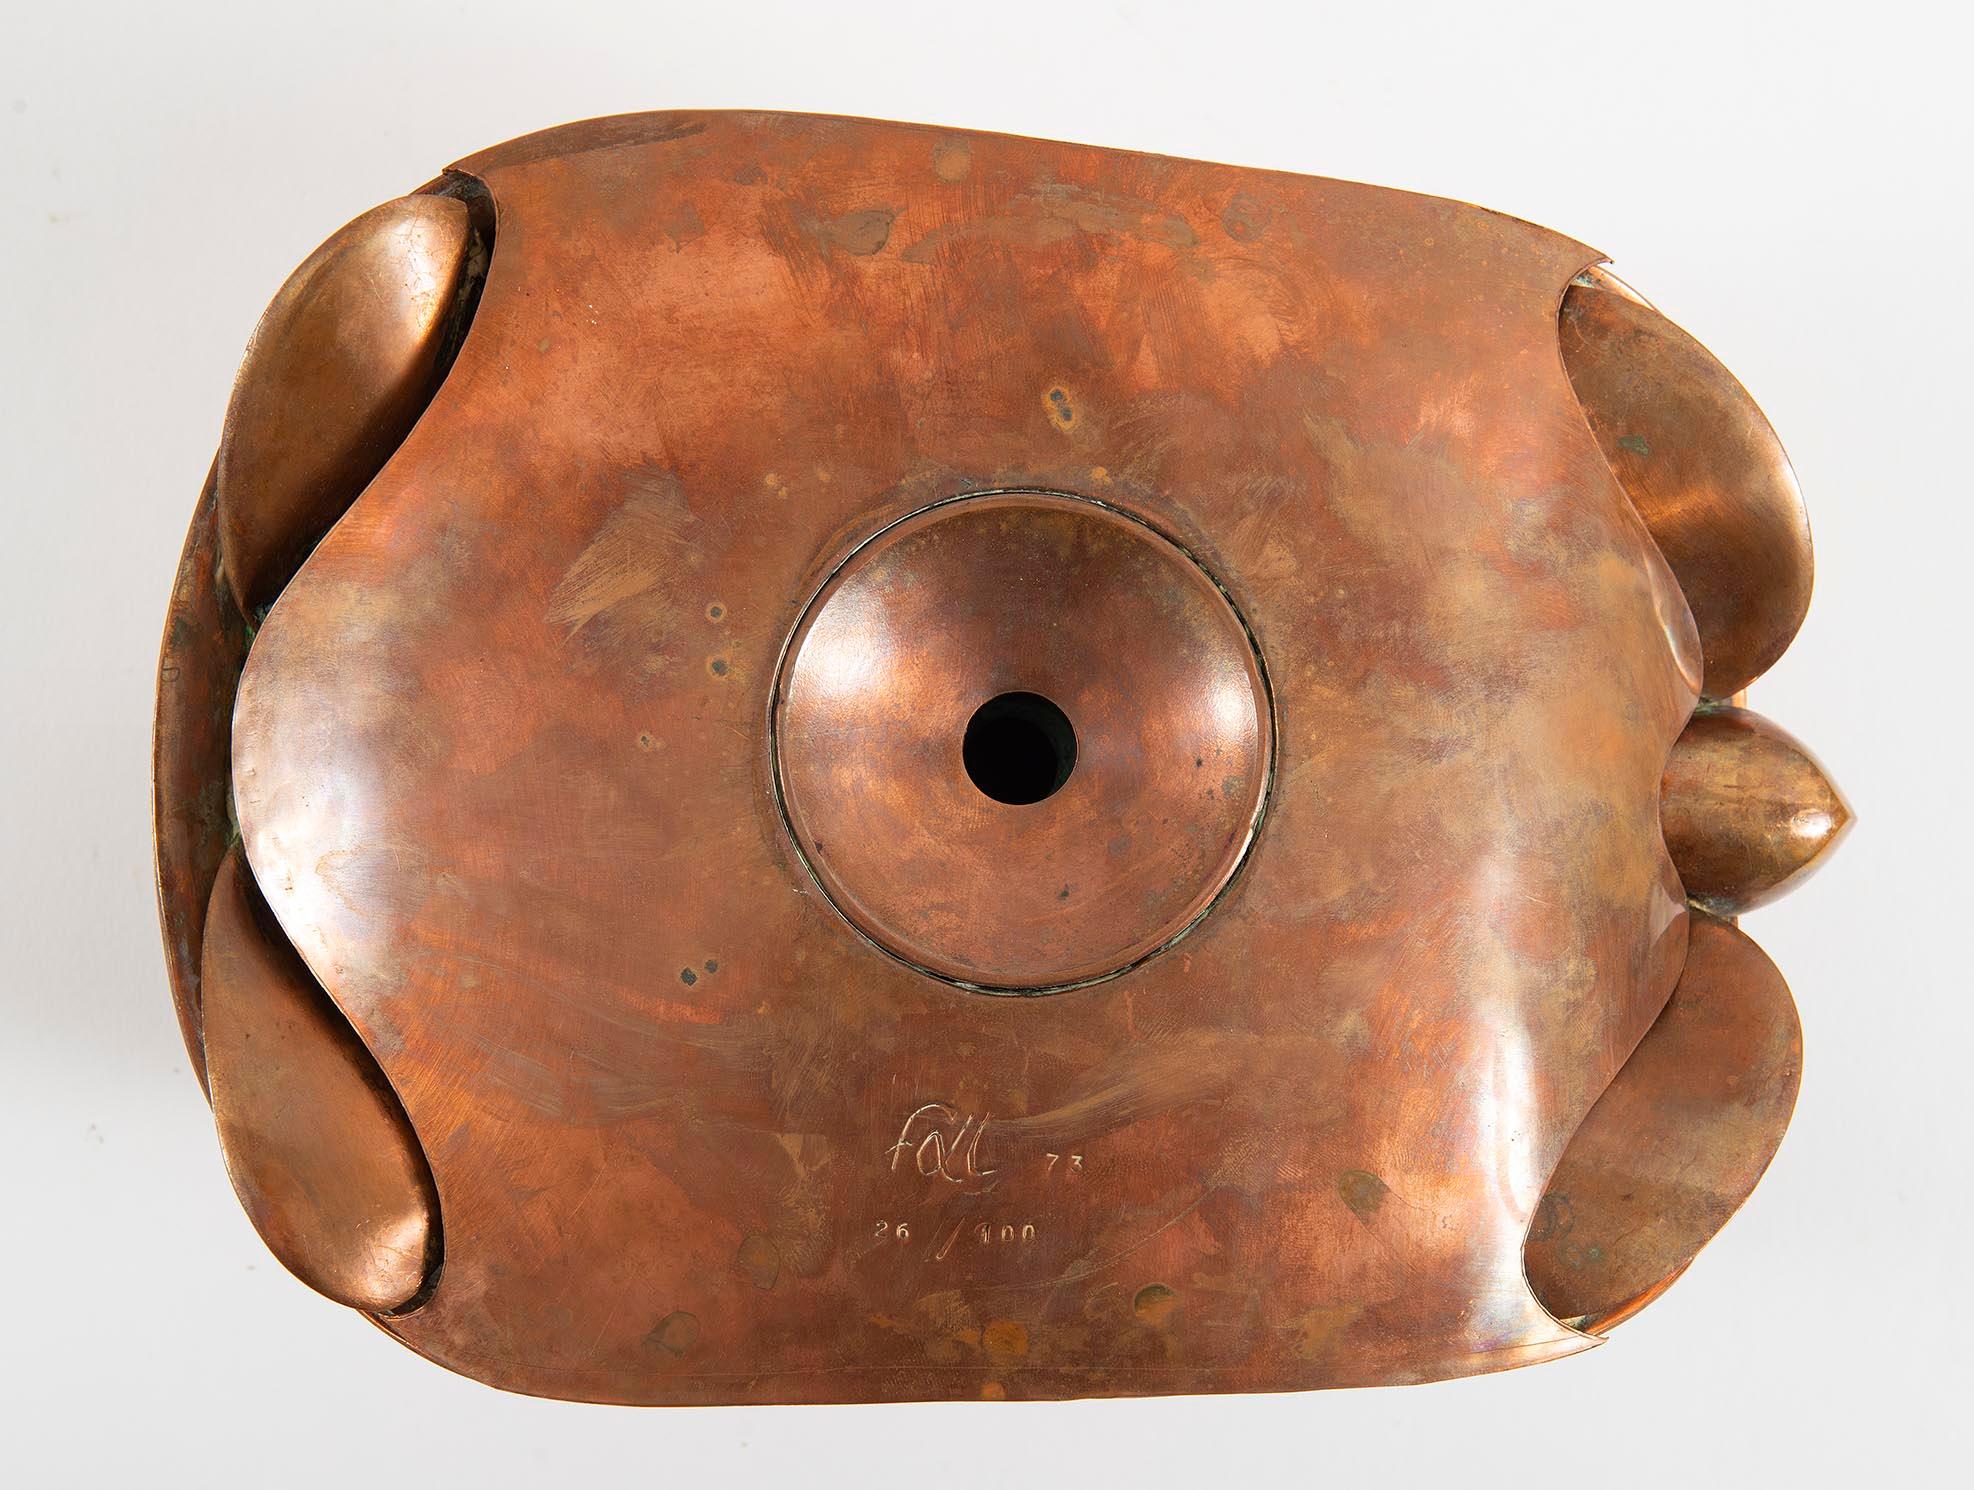 Turtle, by Fx lalanne, Sculpture, Design, Copper, 1970's, ashtray, animal 1